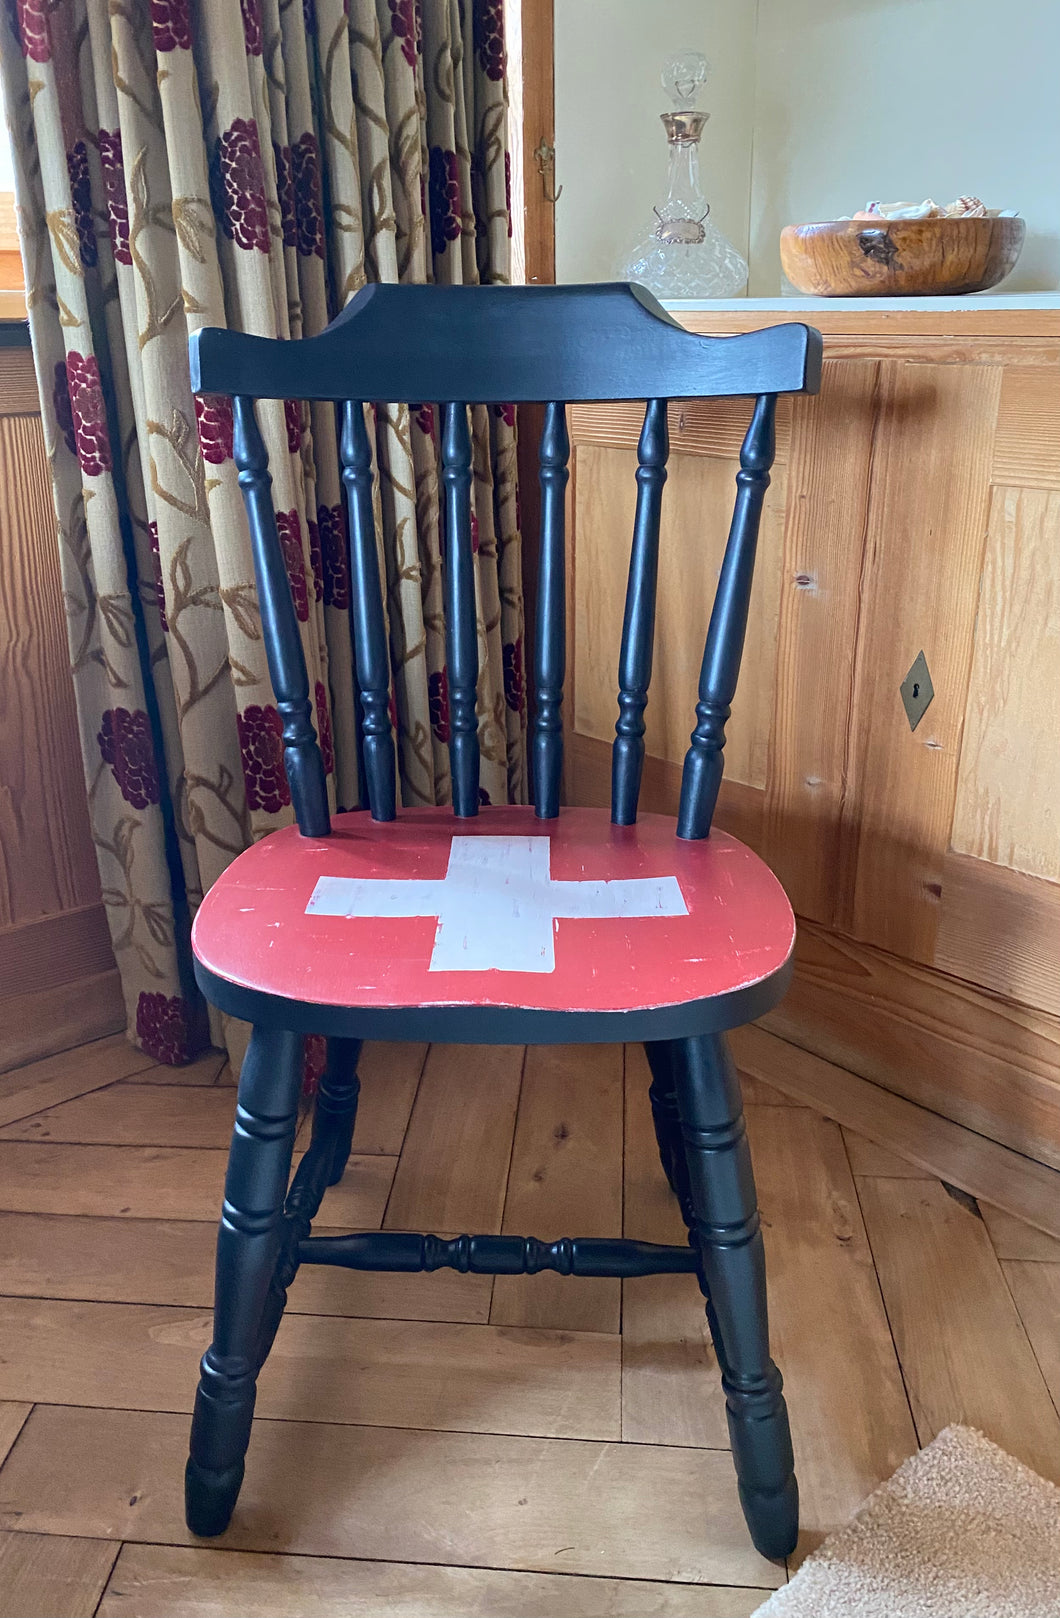 Swiss Chair - Revivals